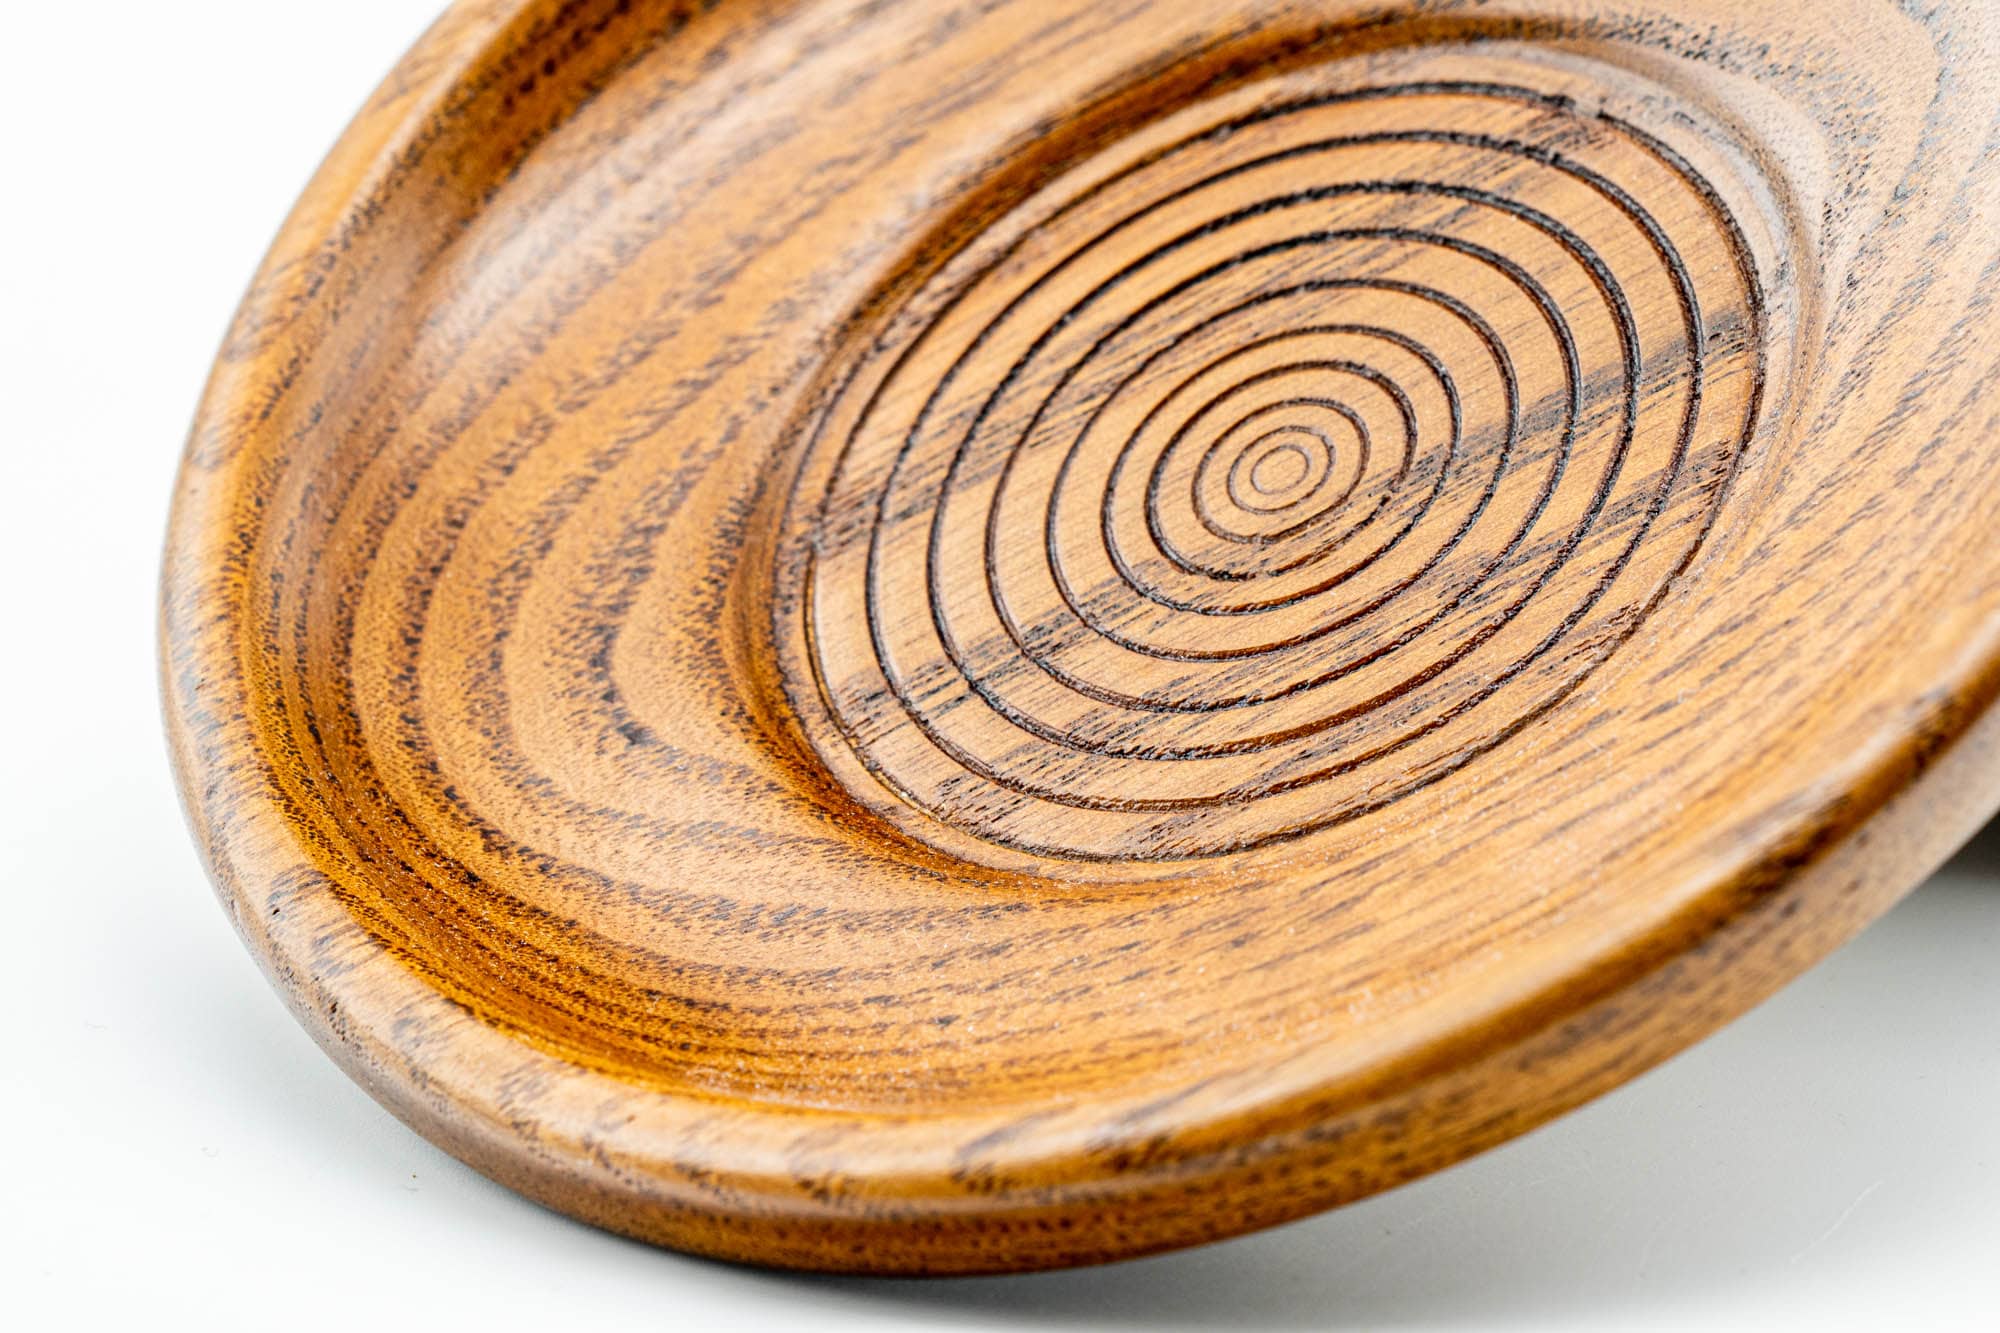 Japanese Chataku - Set of 5 Spiraling Wooden Tea Saucers